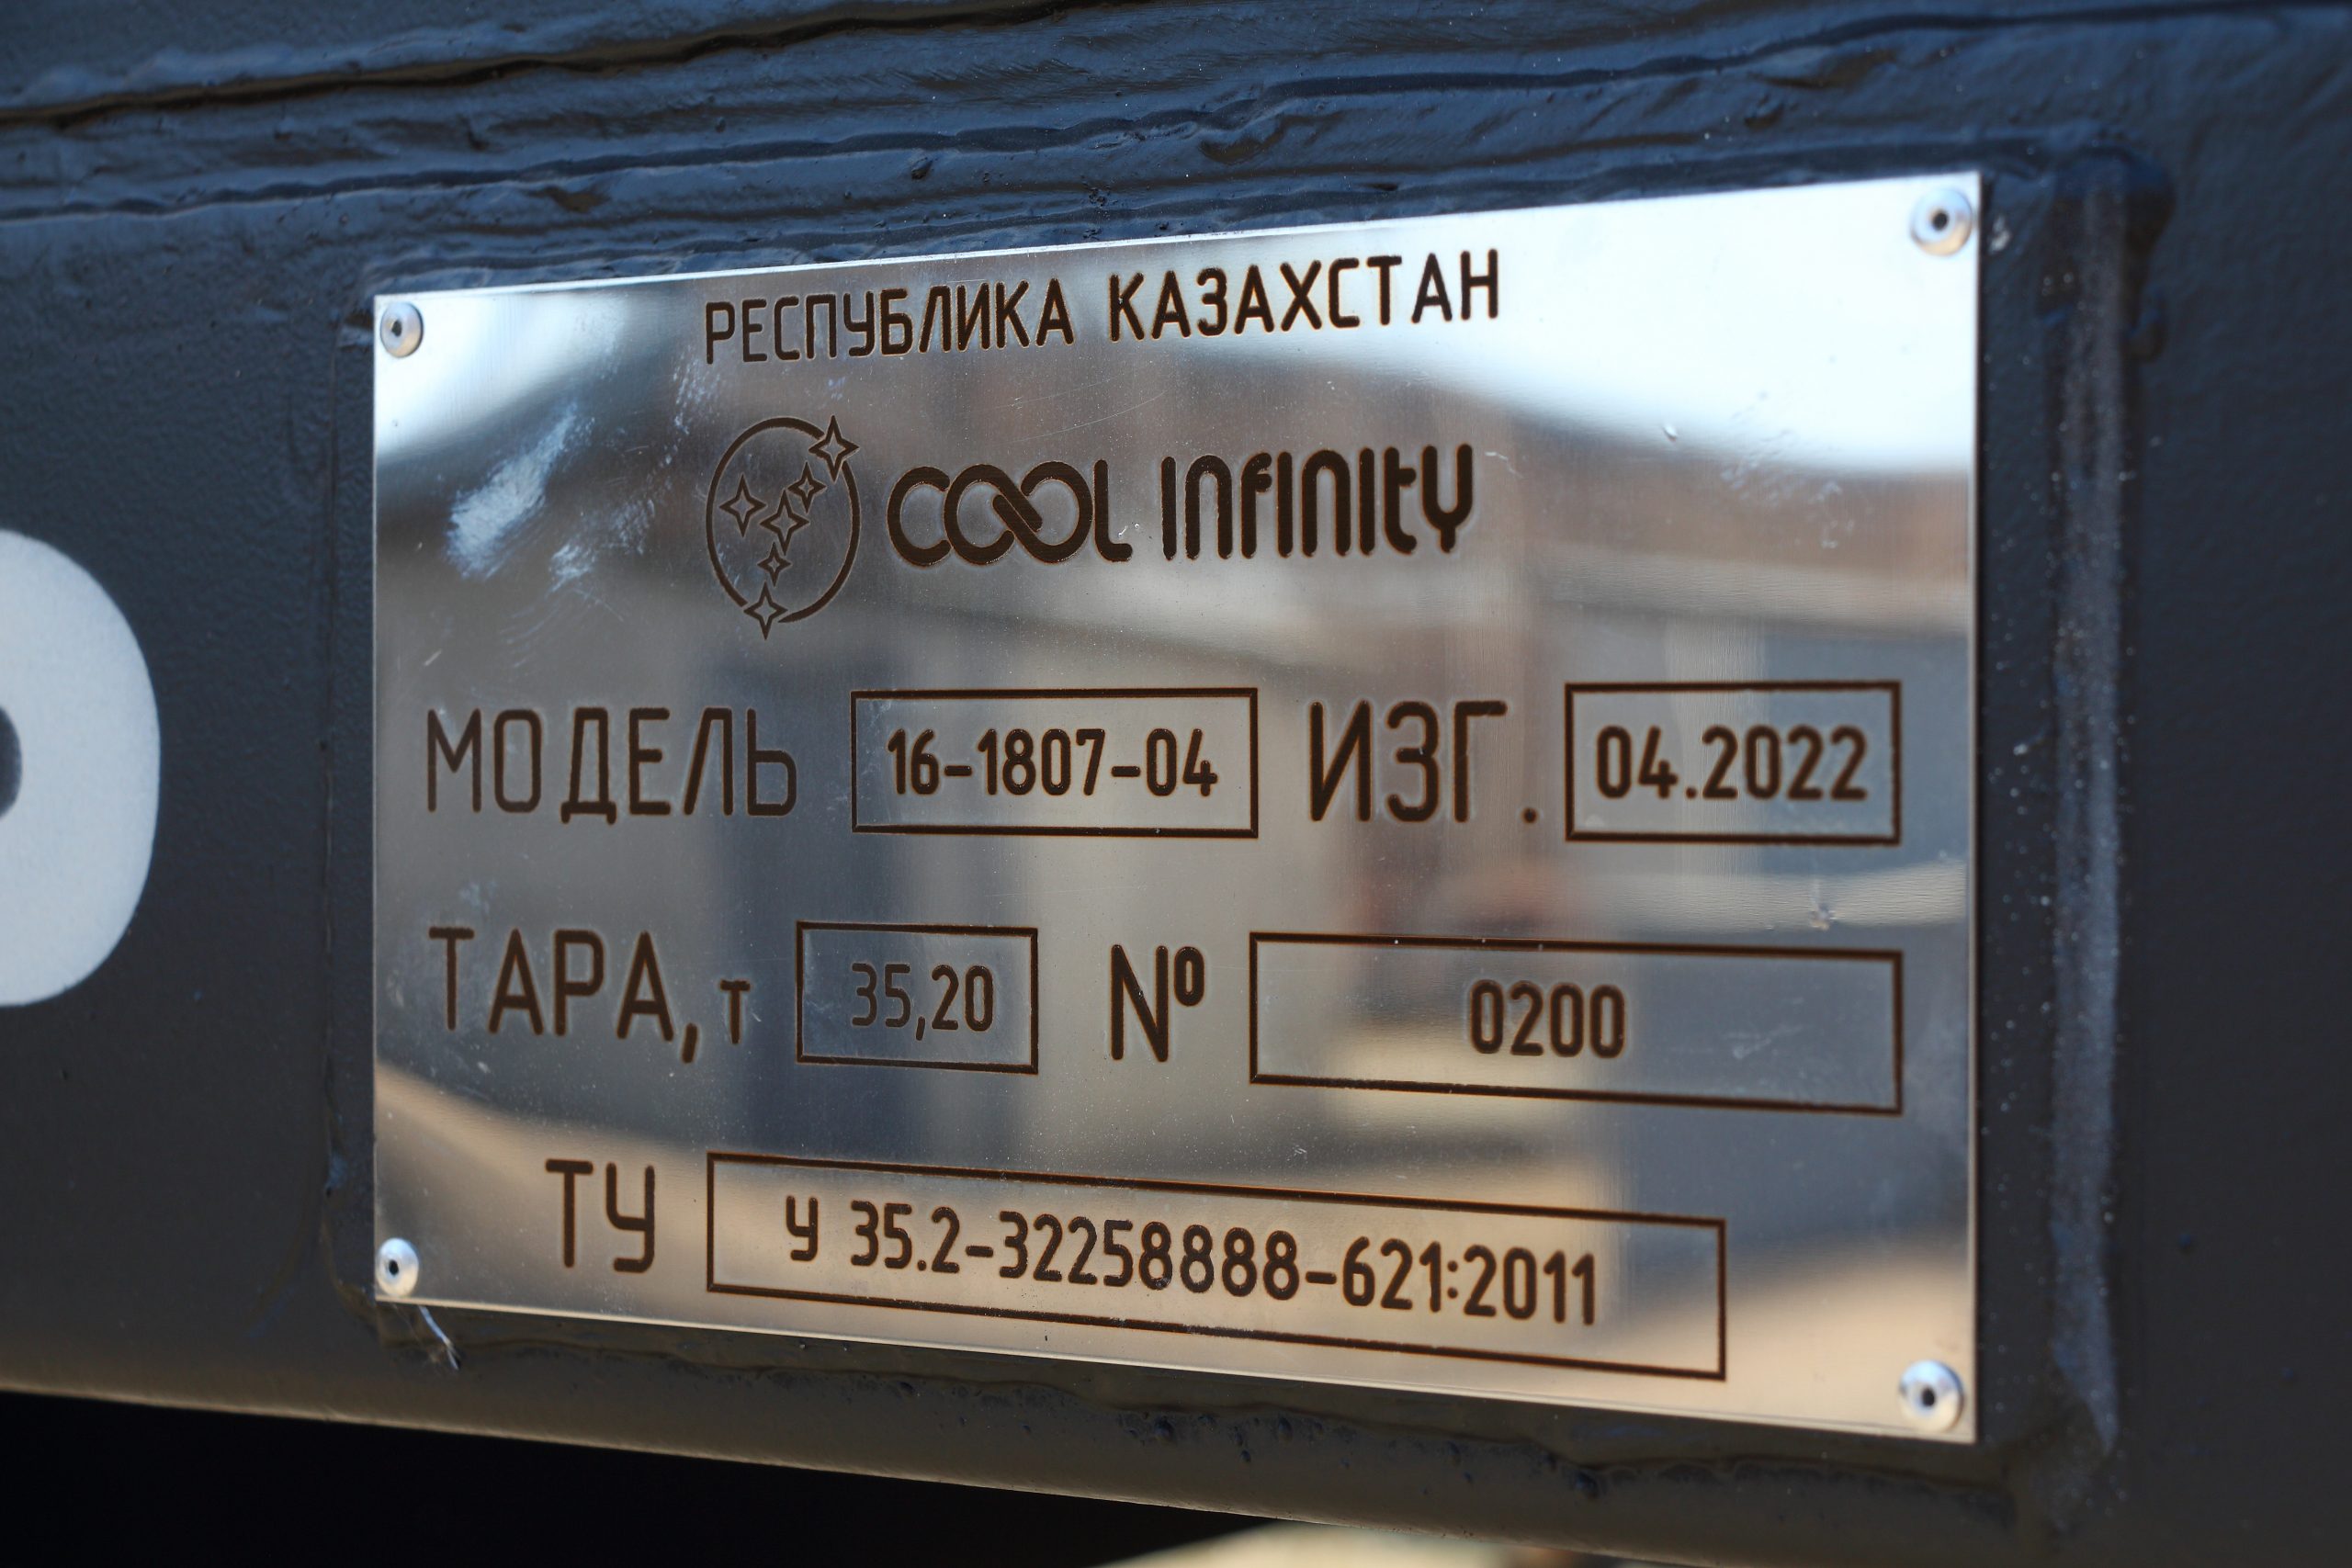 На 200-м вагоне-термосе 16-1807-04, выпущенном Cool Infinity